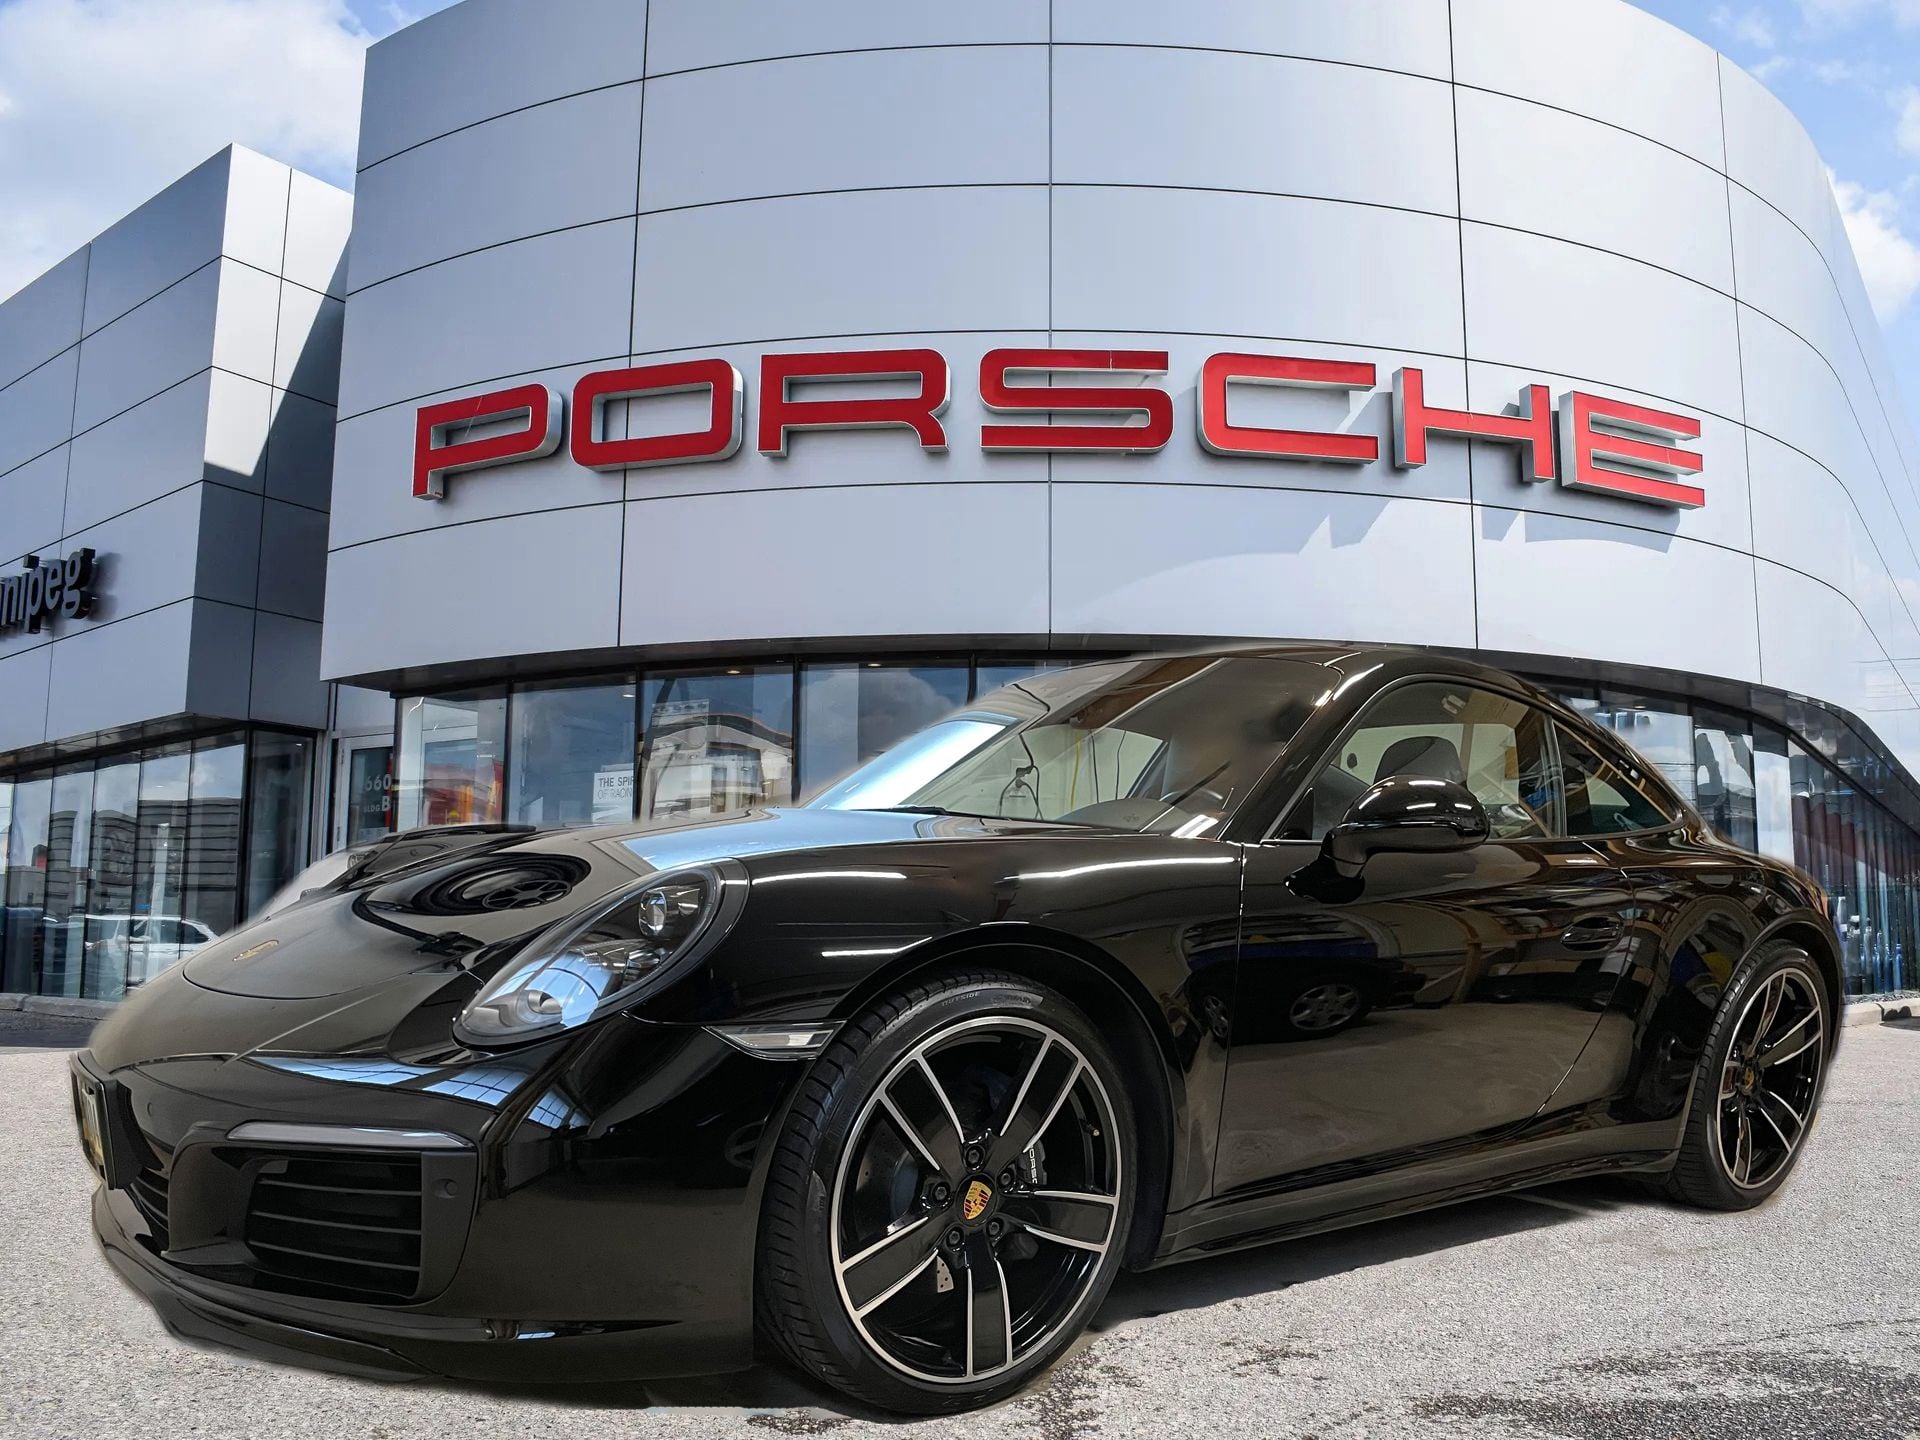 2019 Porsche 911 - 2019 911 Carrera 4 PDK CPO - Canada - Used - VIN WP0AA2A91KS103235 - 12,481 Miles - 6 cyl - AWD - Automatic - Coupe - Black - Winnipeg, MB R3R3A6, Canada